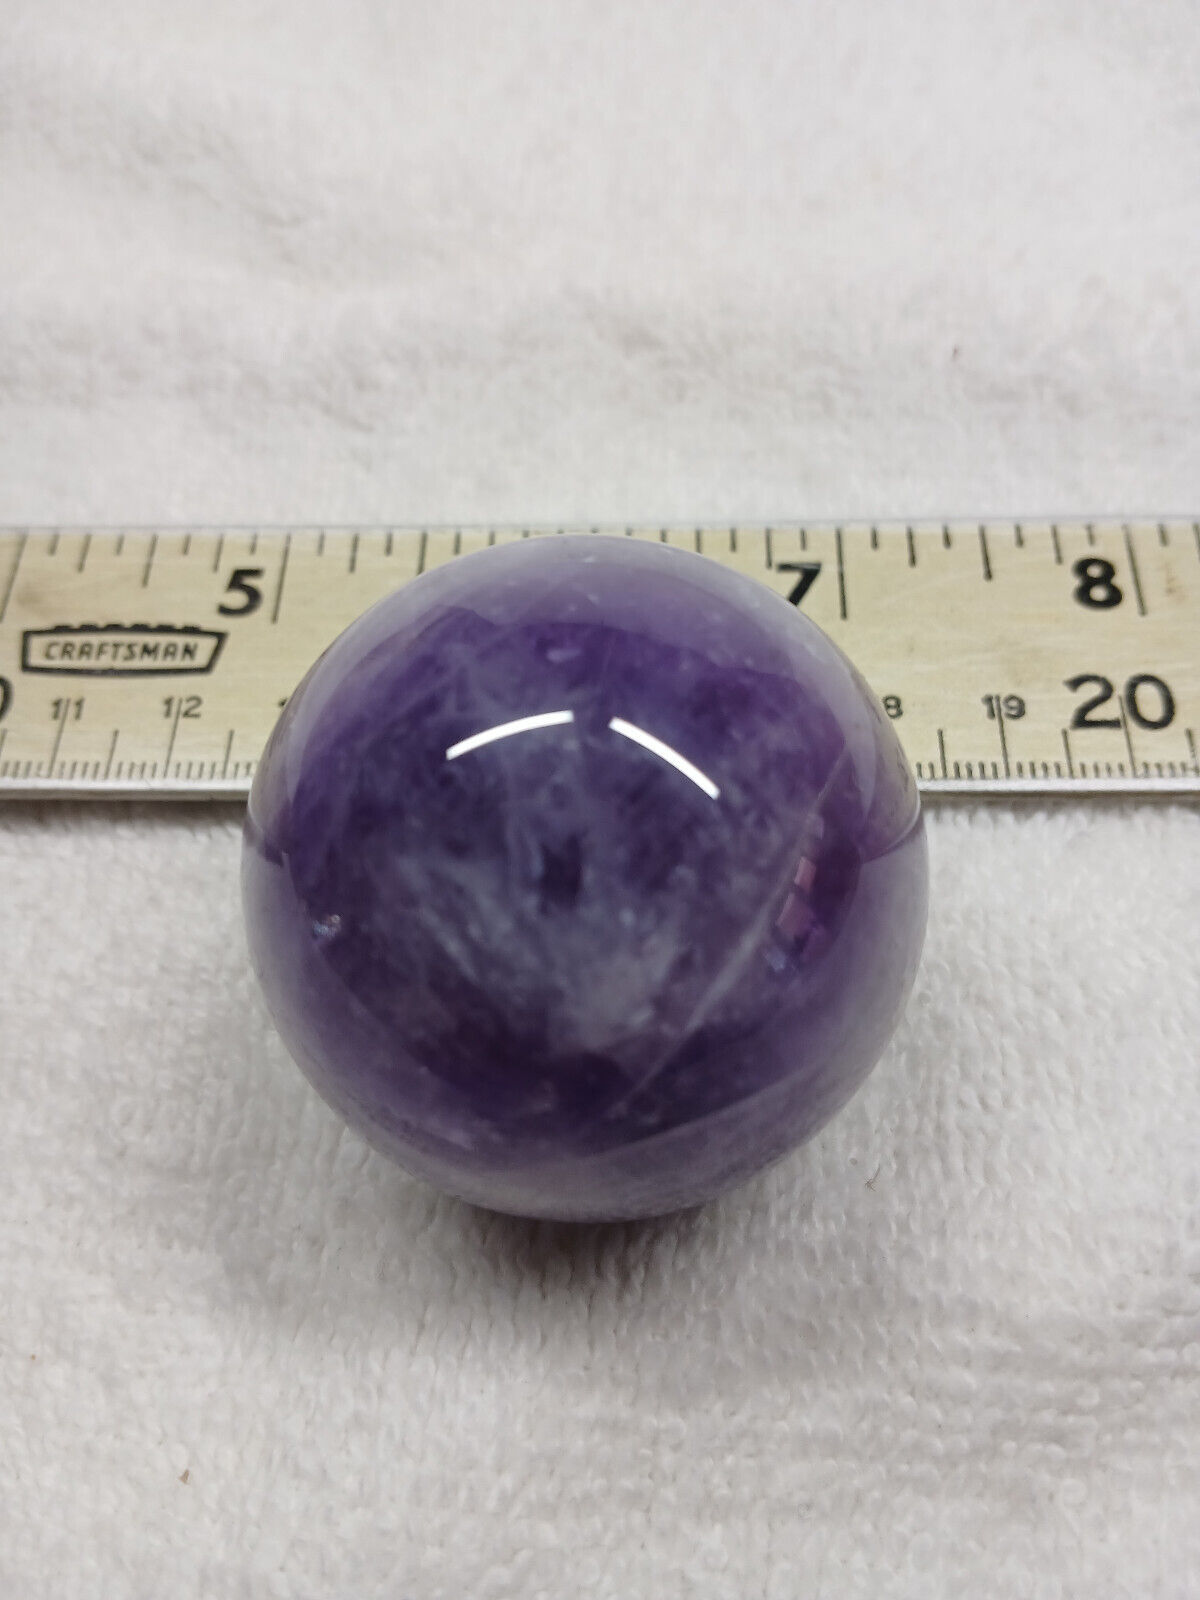 Amethyst sphere, polished, 2 inch diameter, pretty purple